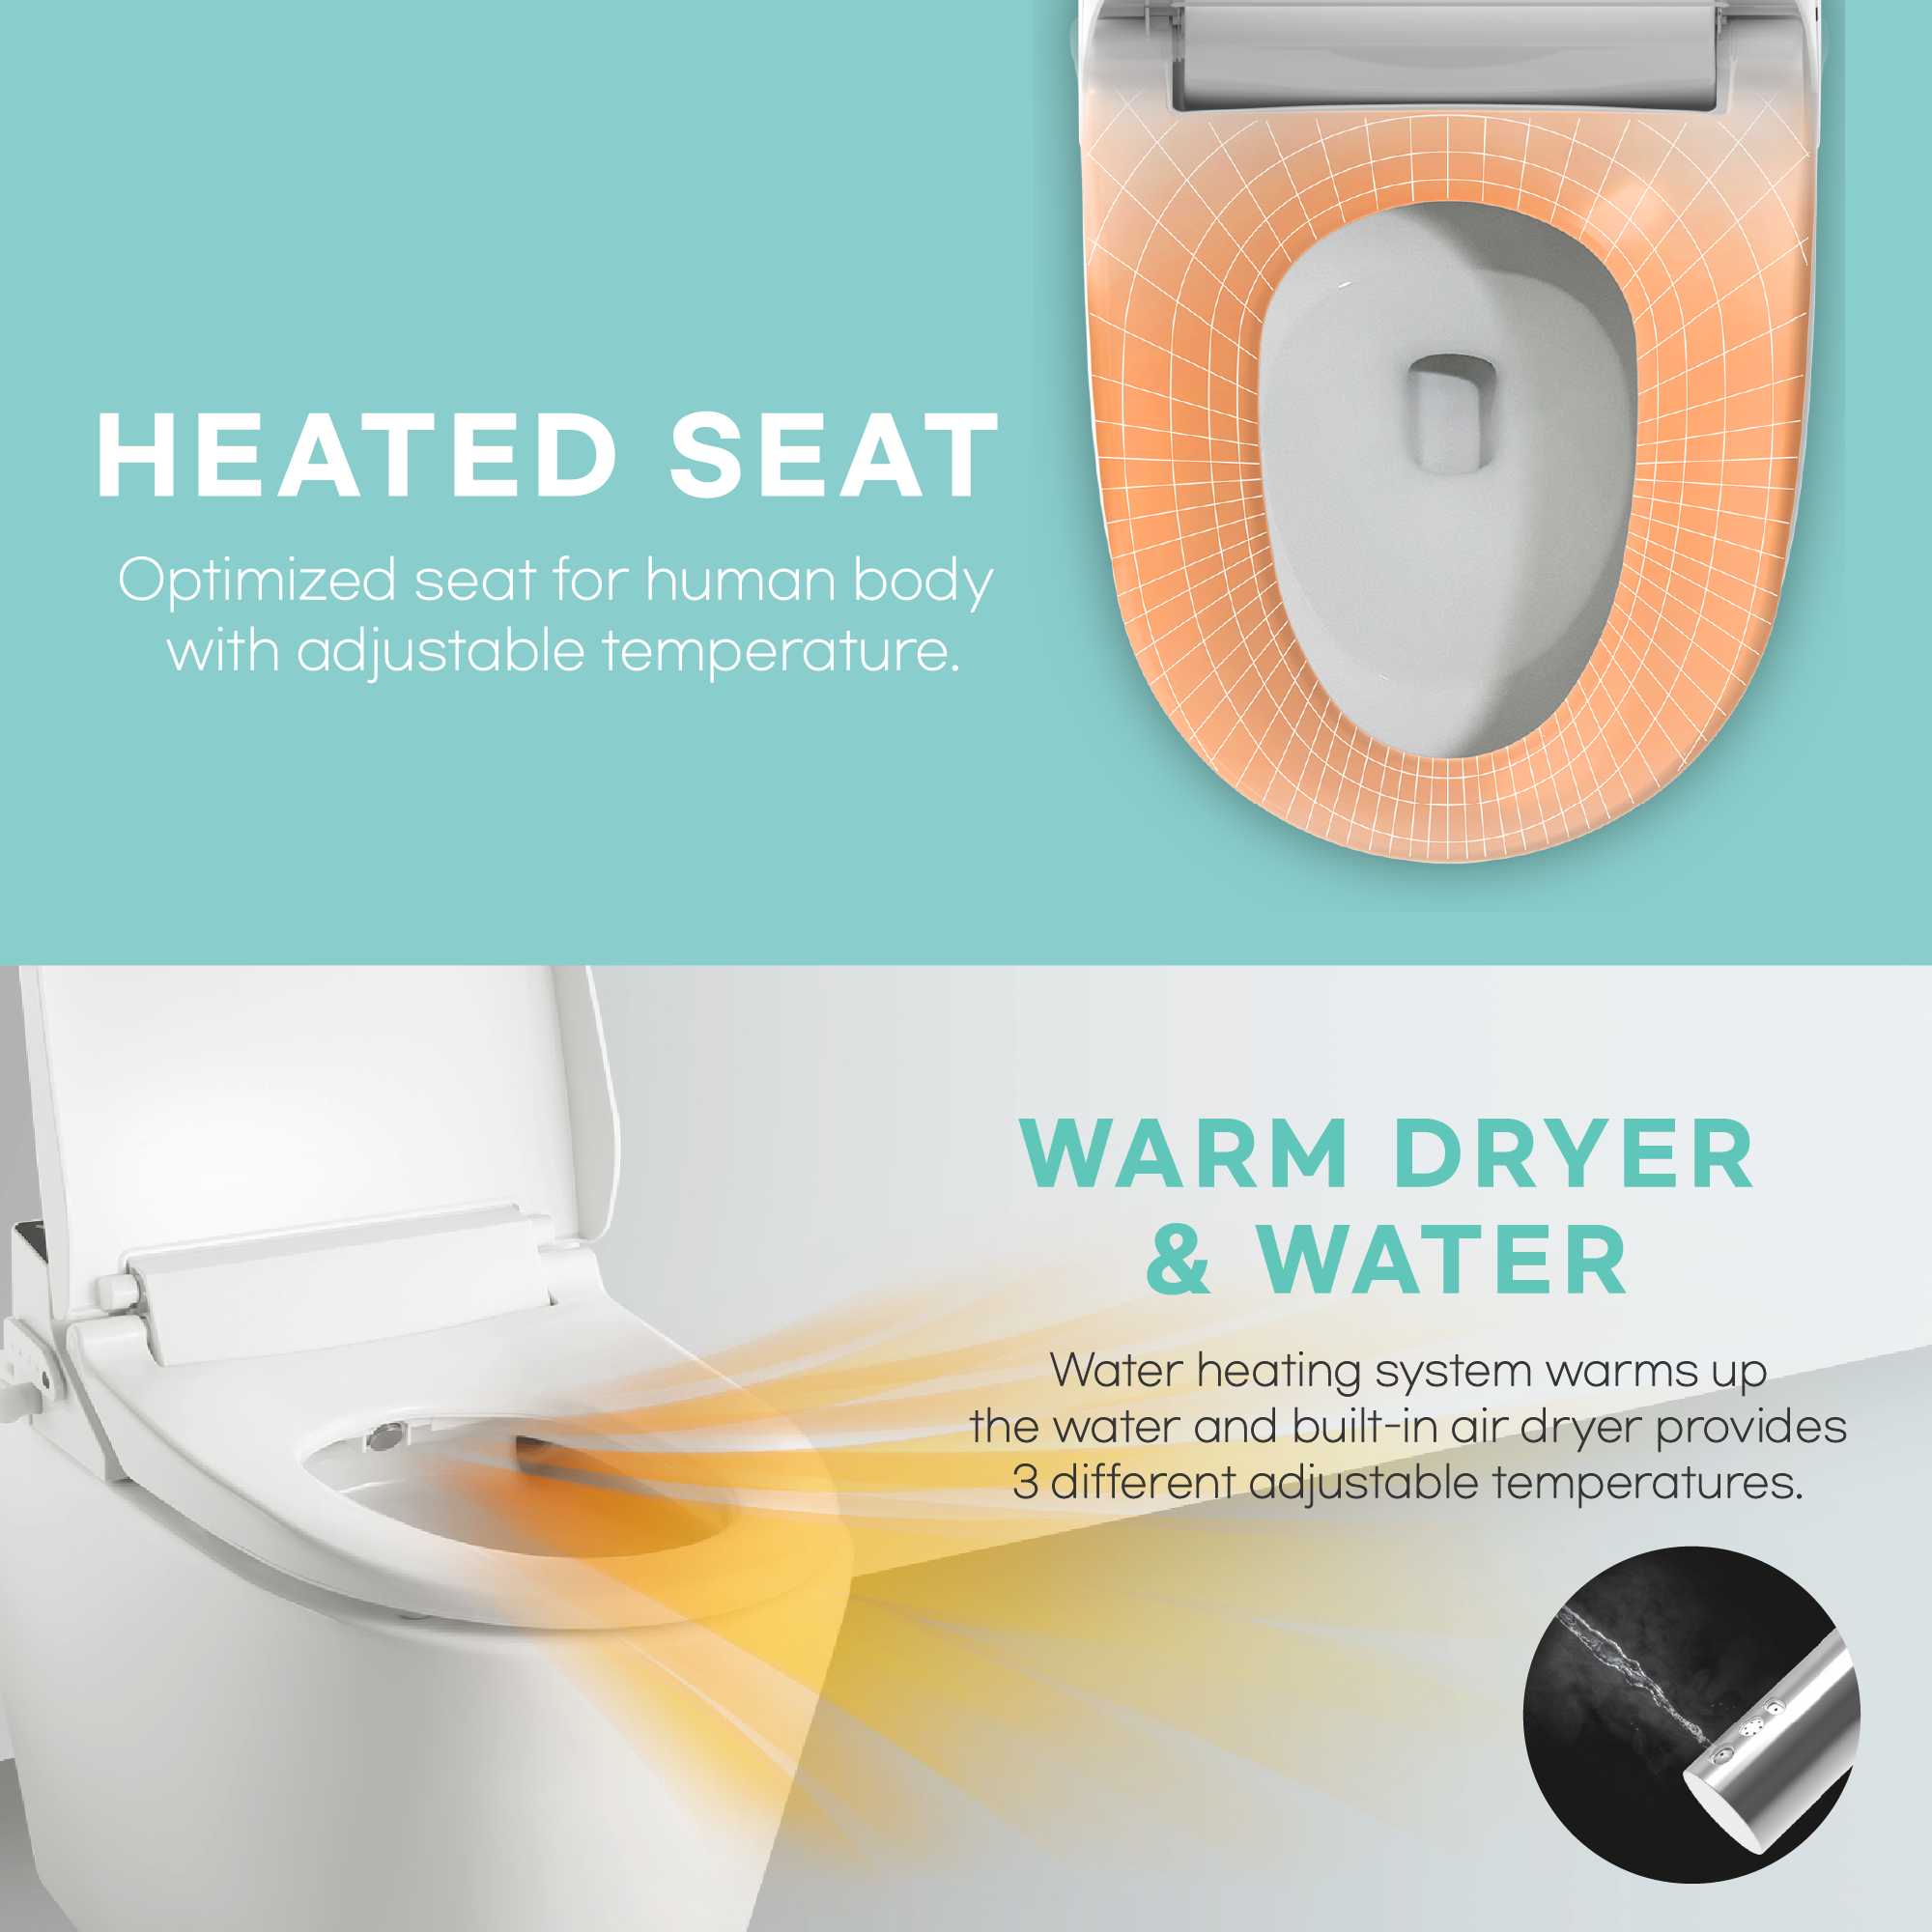 Bidet Toilet Seat VB-6000SE(Elongated) / VB-6100SR(Round)